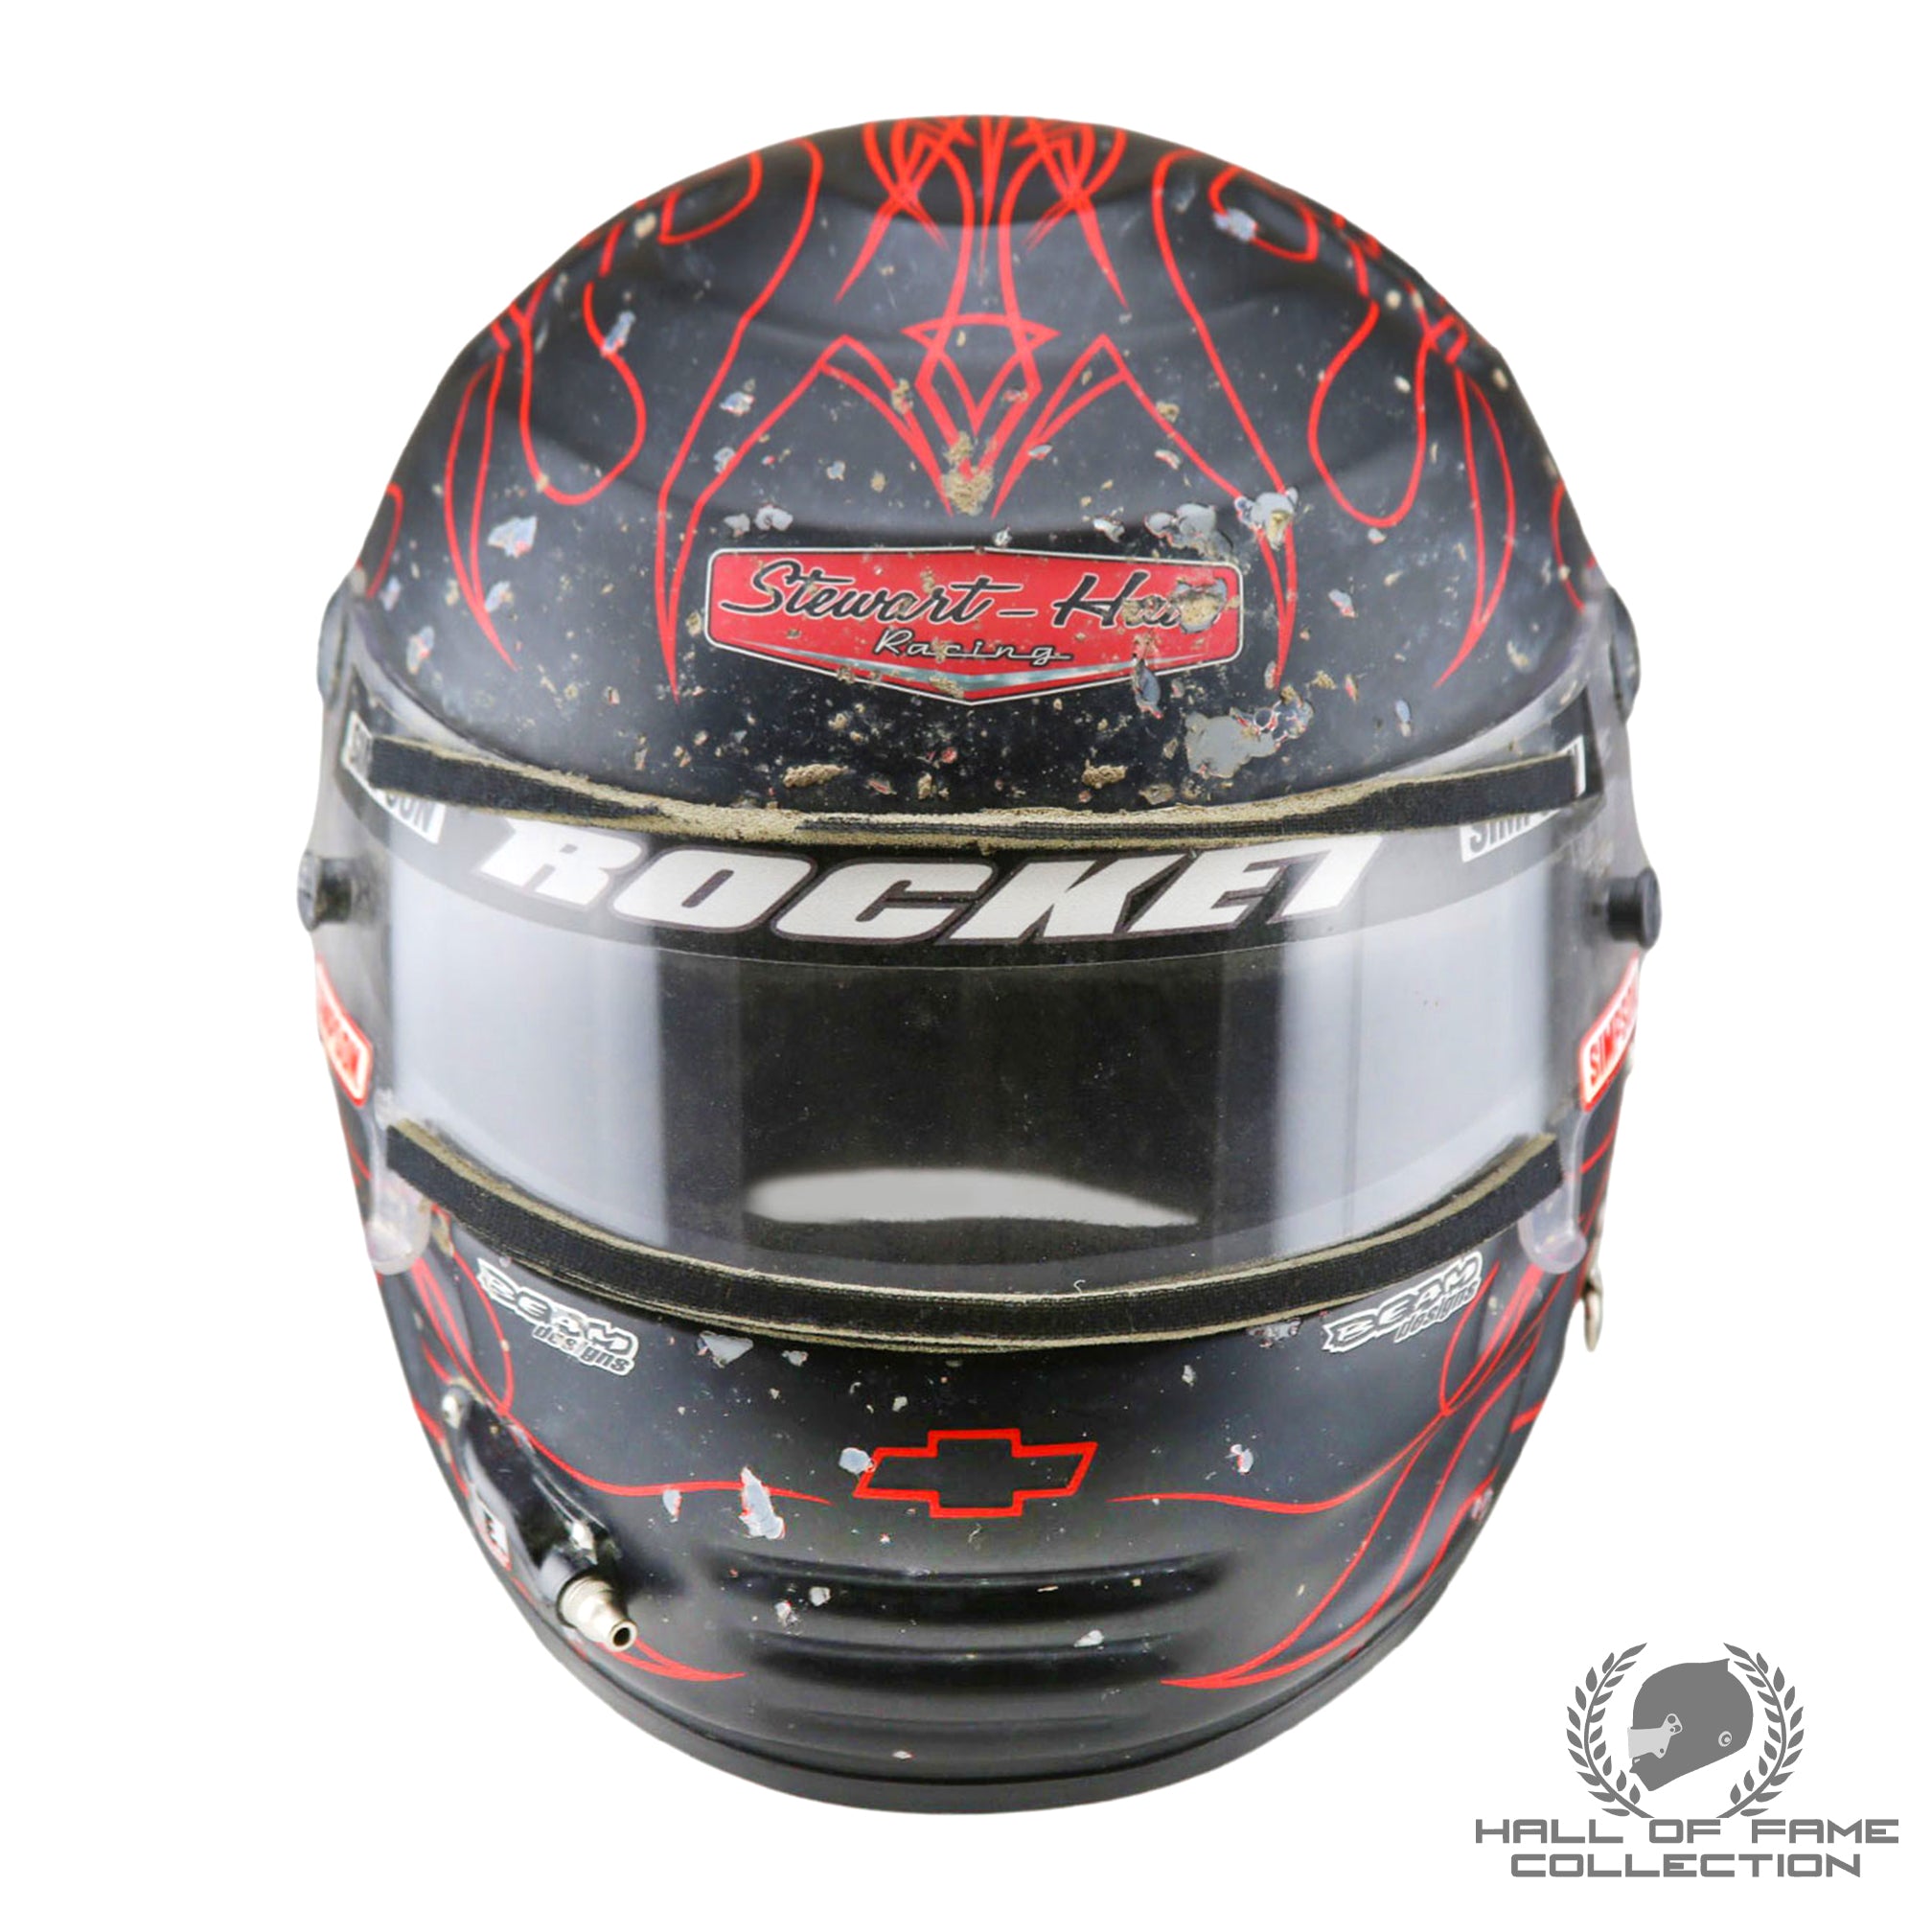 2010 Tony Stewart Eldora Race Winning 360 Sprintcar Helmet